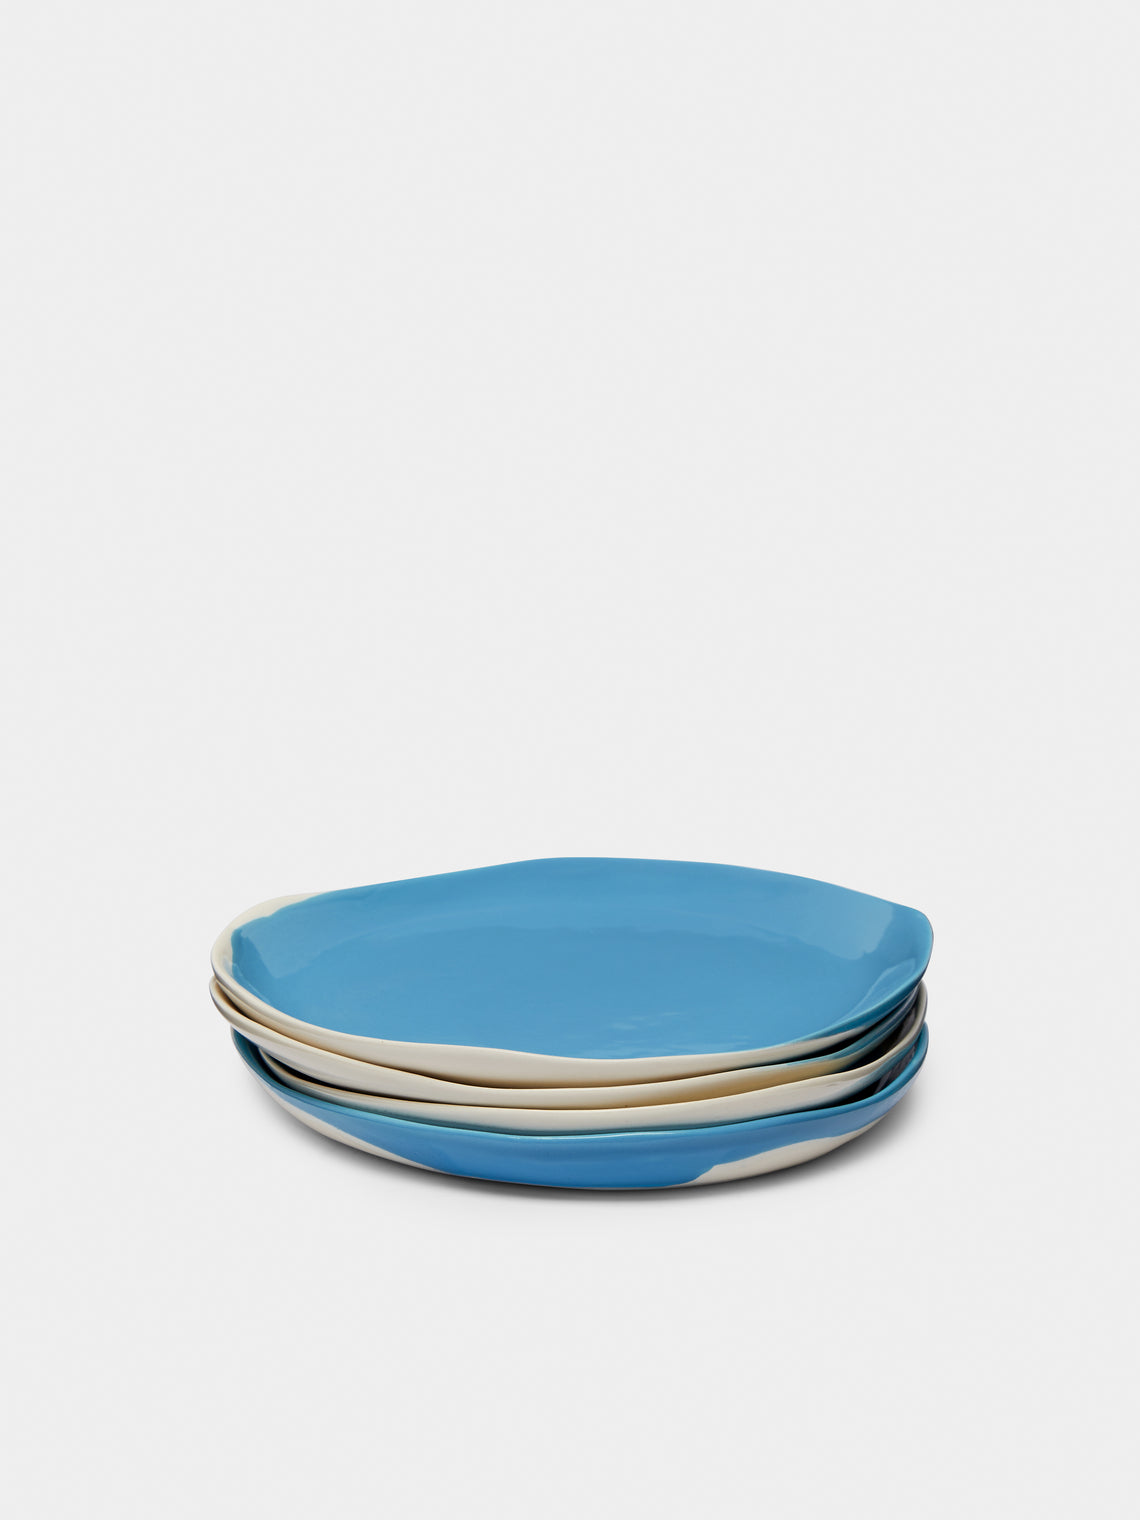 Pottery & Poetry - Hand-Glazed Porcelain Side Plates (Set of 4) - Light Blue - ABASK